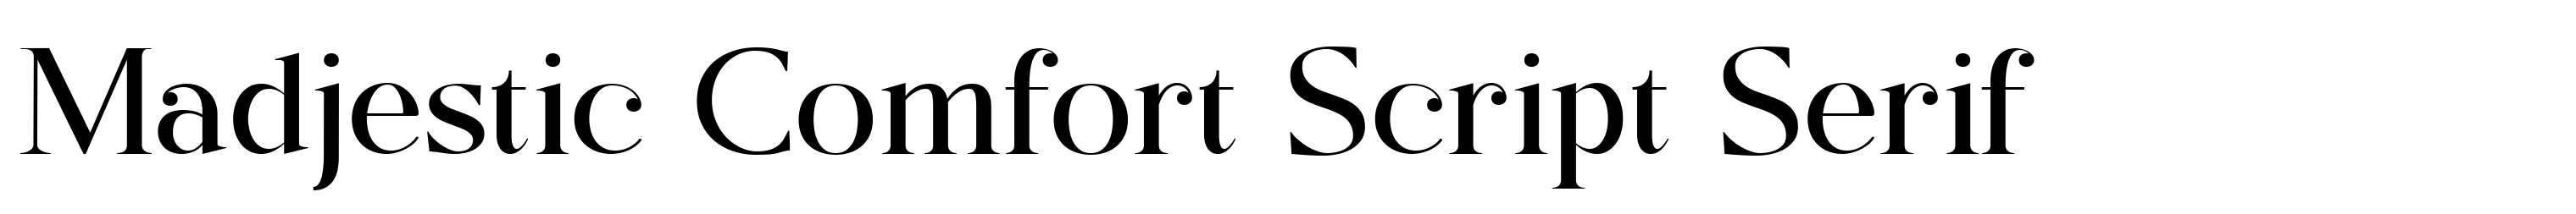 Madjestic Comfort Script Serif